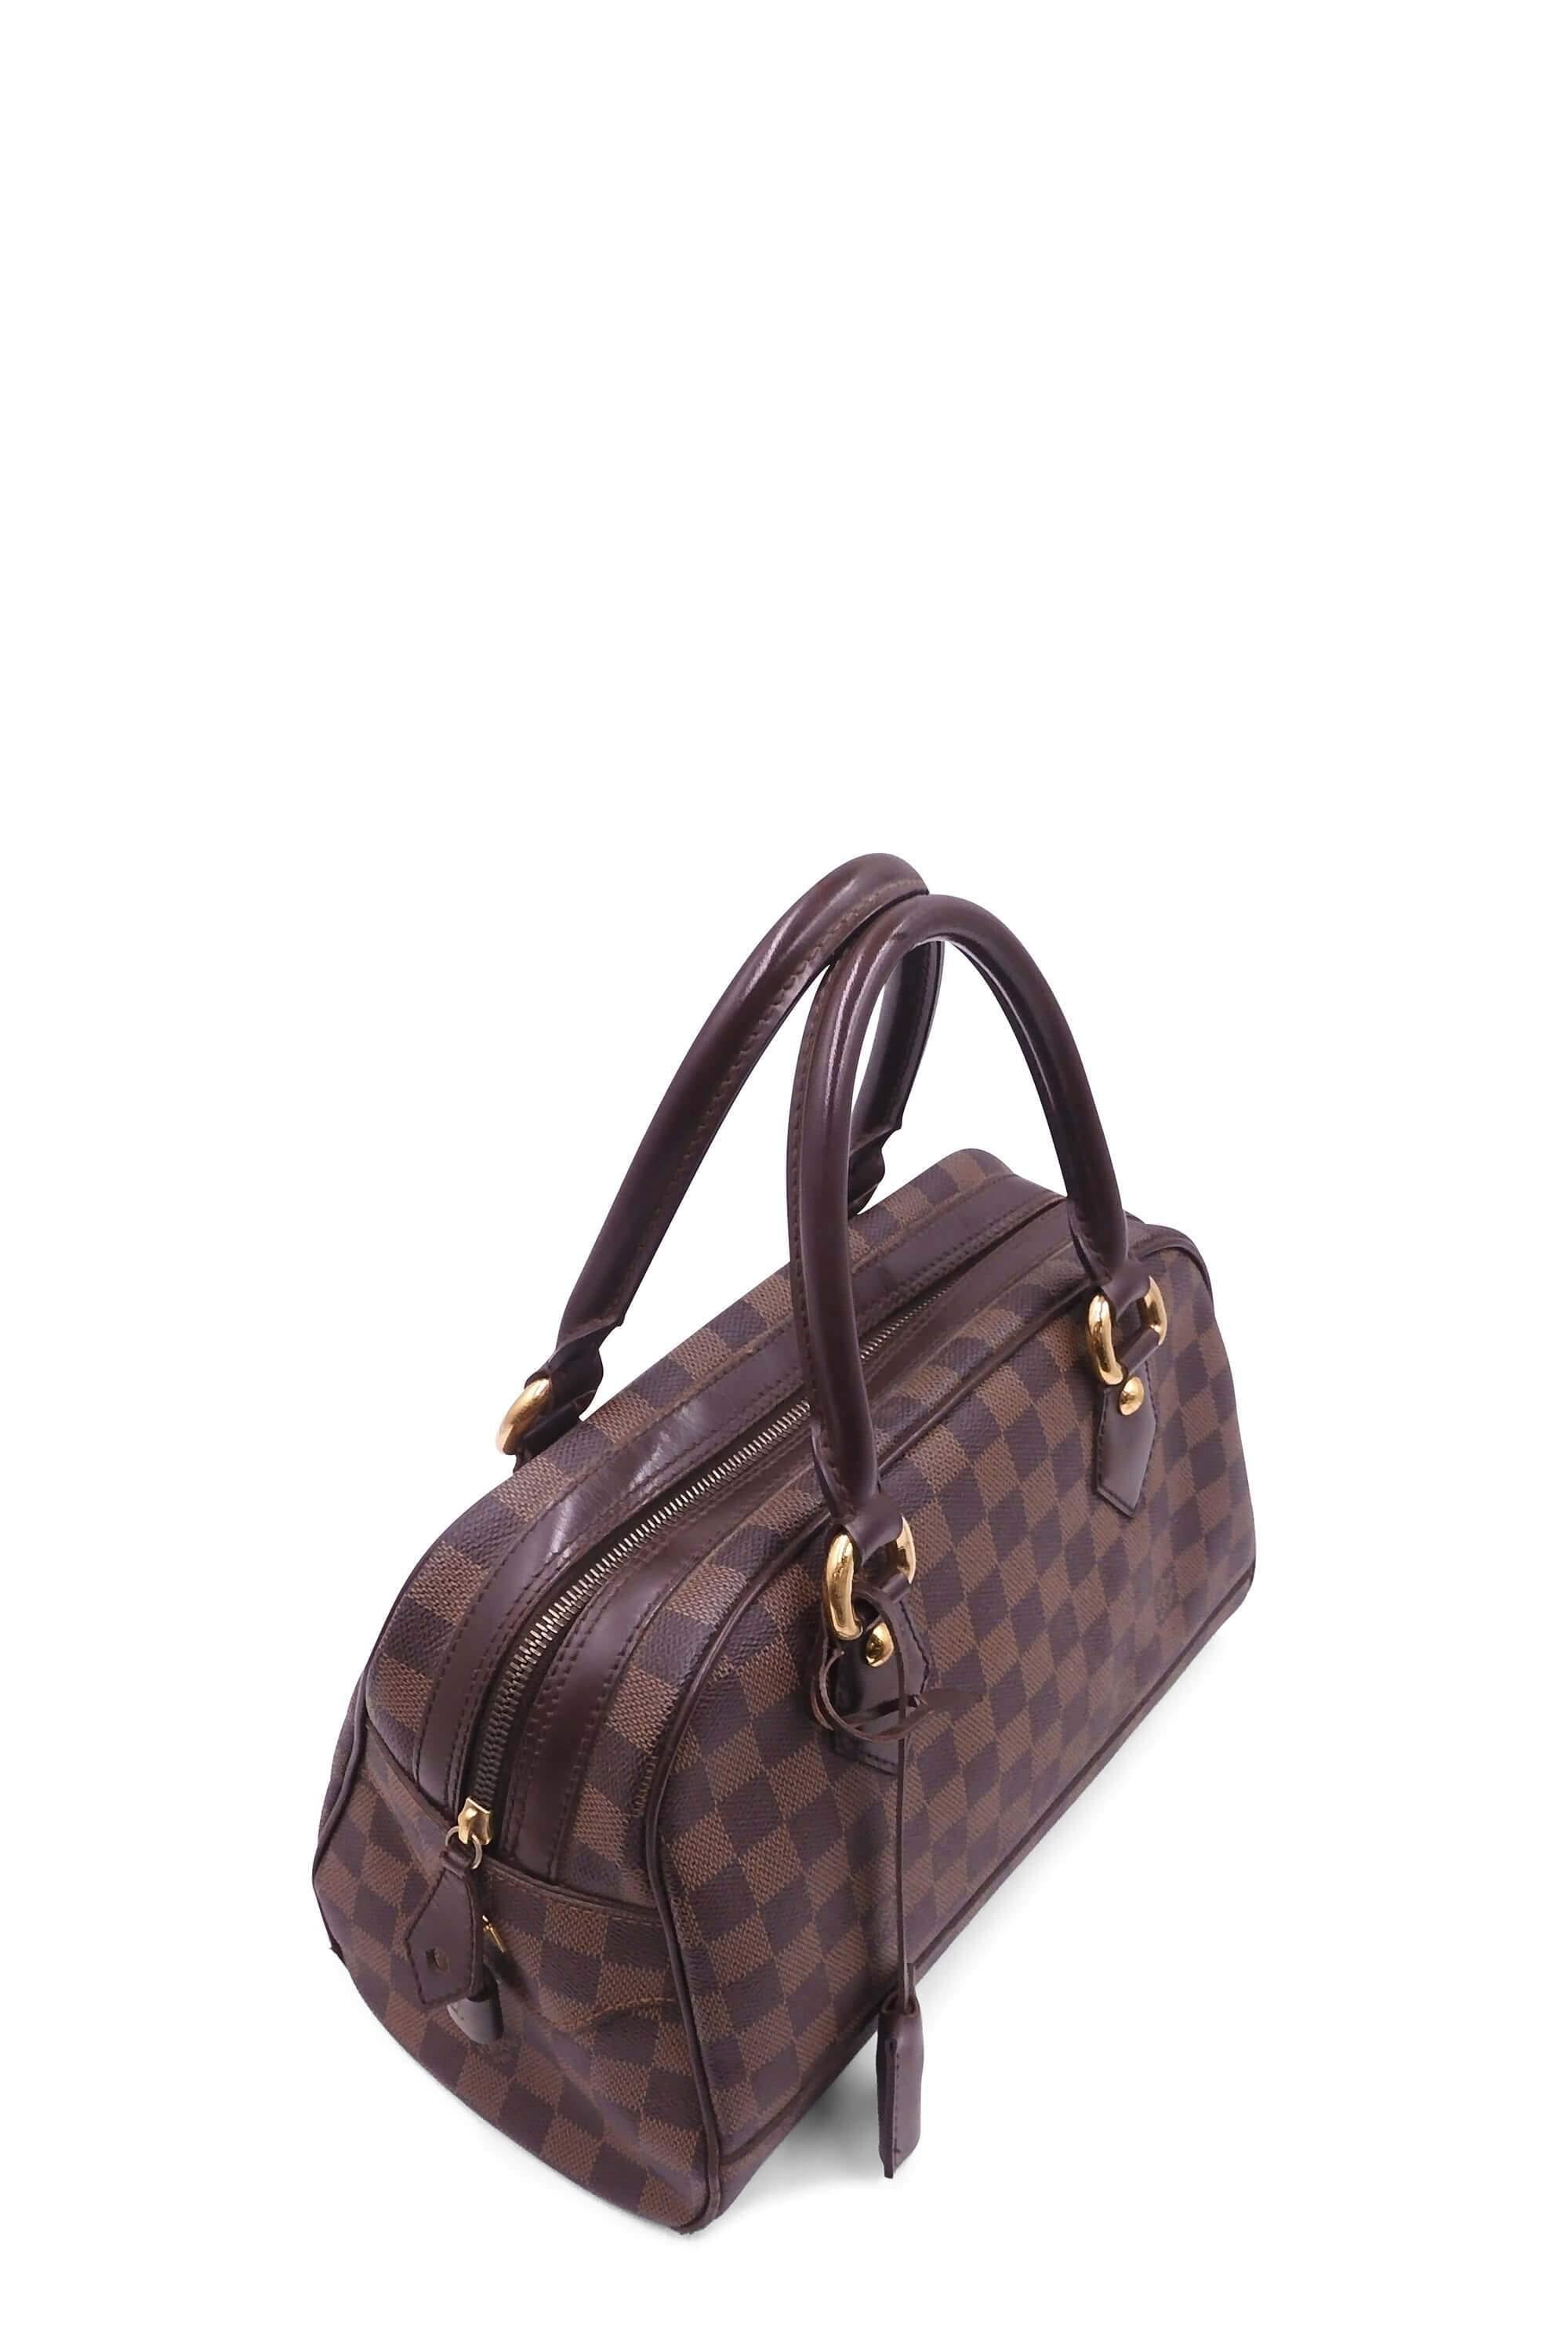 Louis Vuitton Duomo Damier Ebene Shoulder Bag Used (6621)